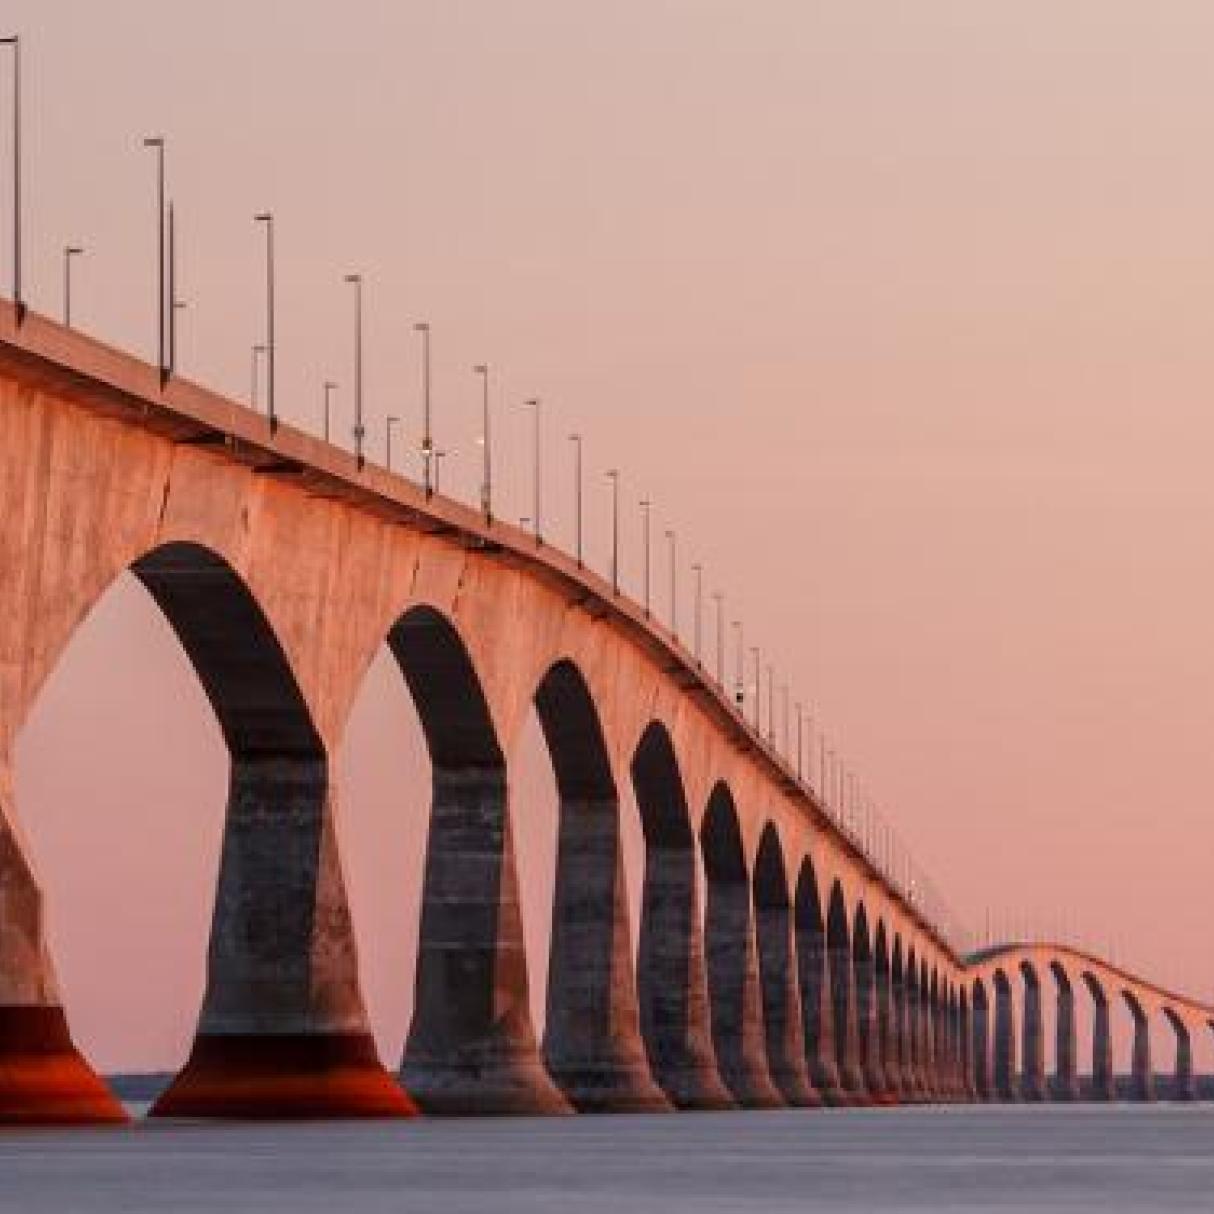 A long bridge looks pink at dusk